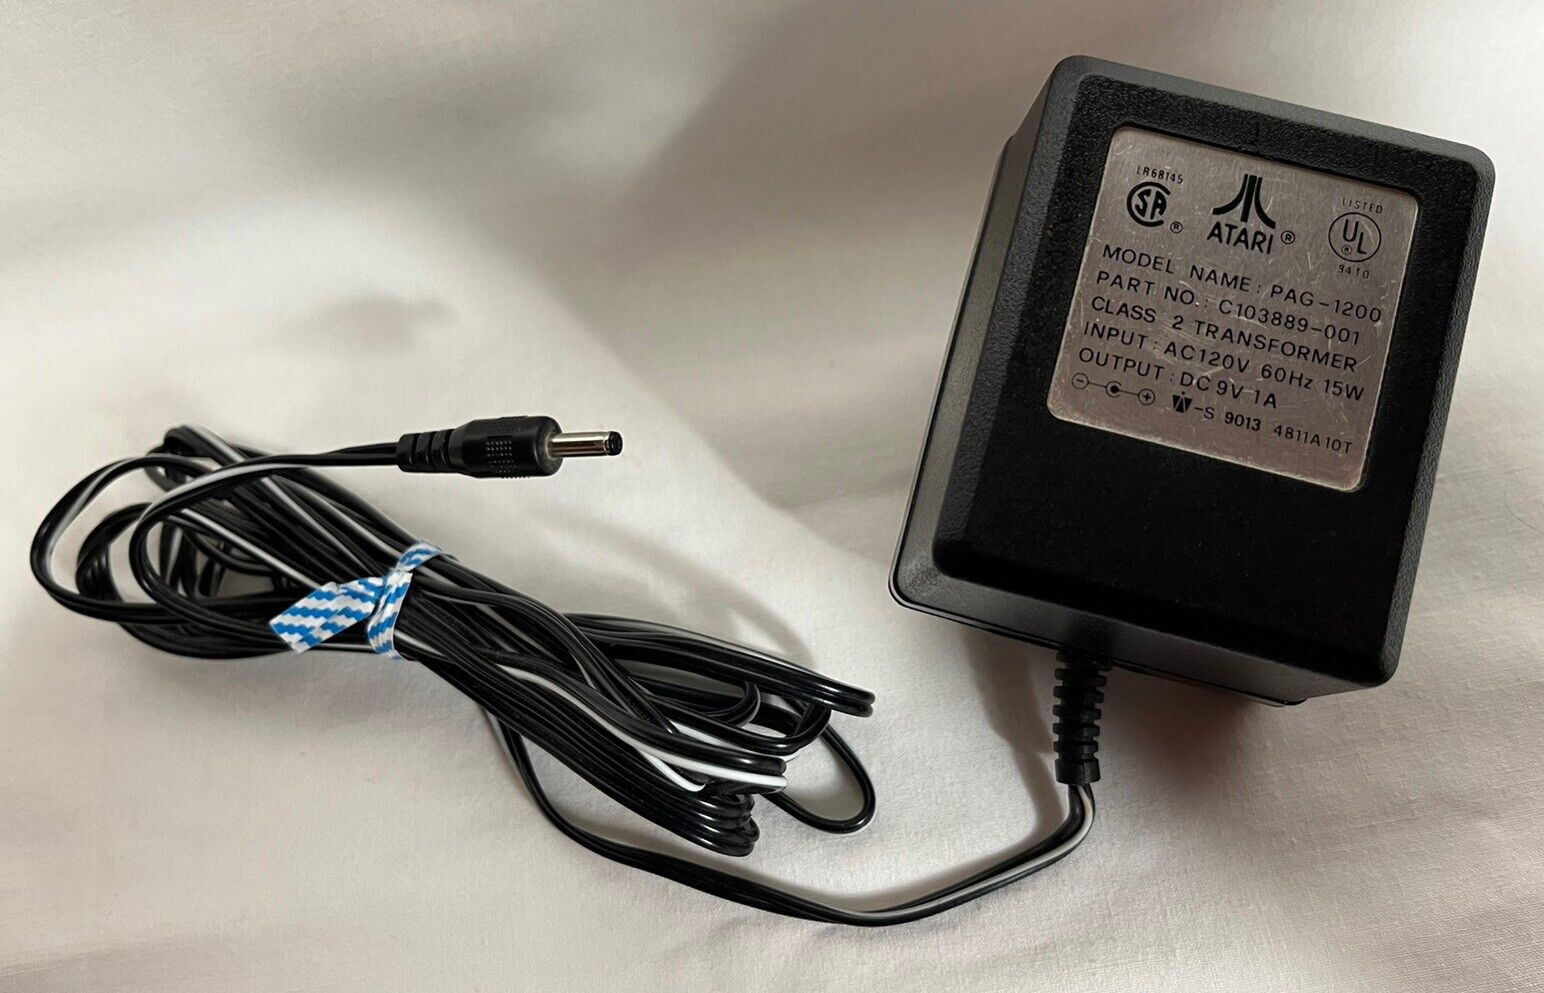 VTG OEM ATARI LYNX Power Supply AC Adapter PAG-1200 with QC sticker